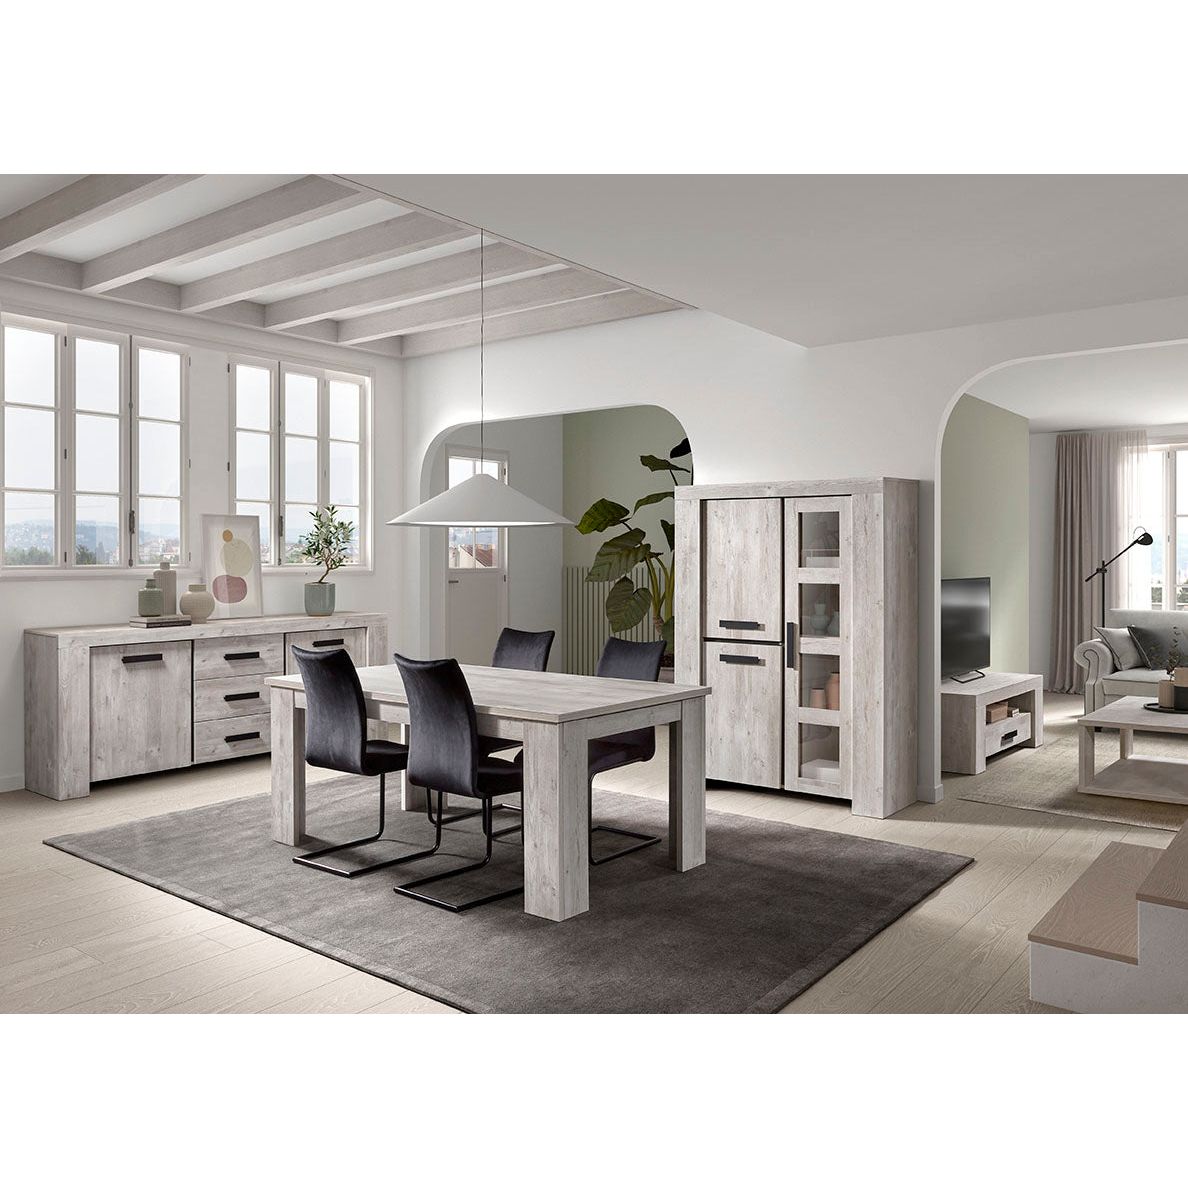 Display cabinet | Furniture series Bergen | light gray, natural,